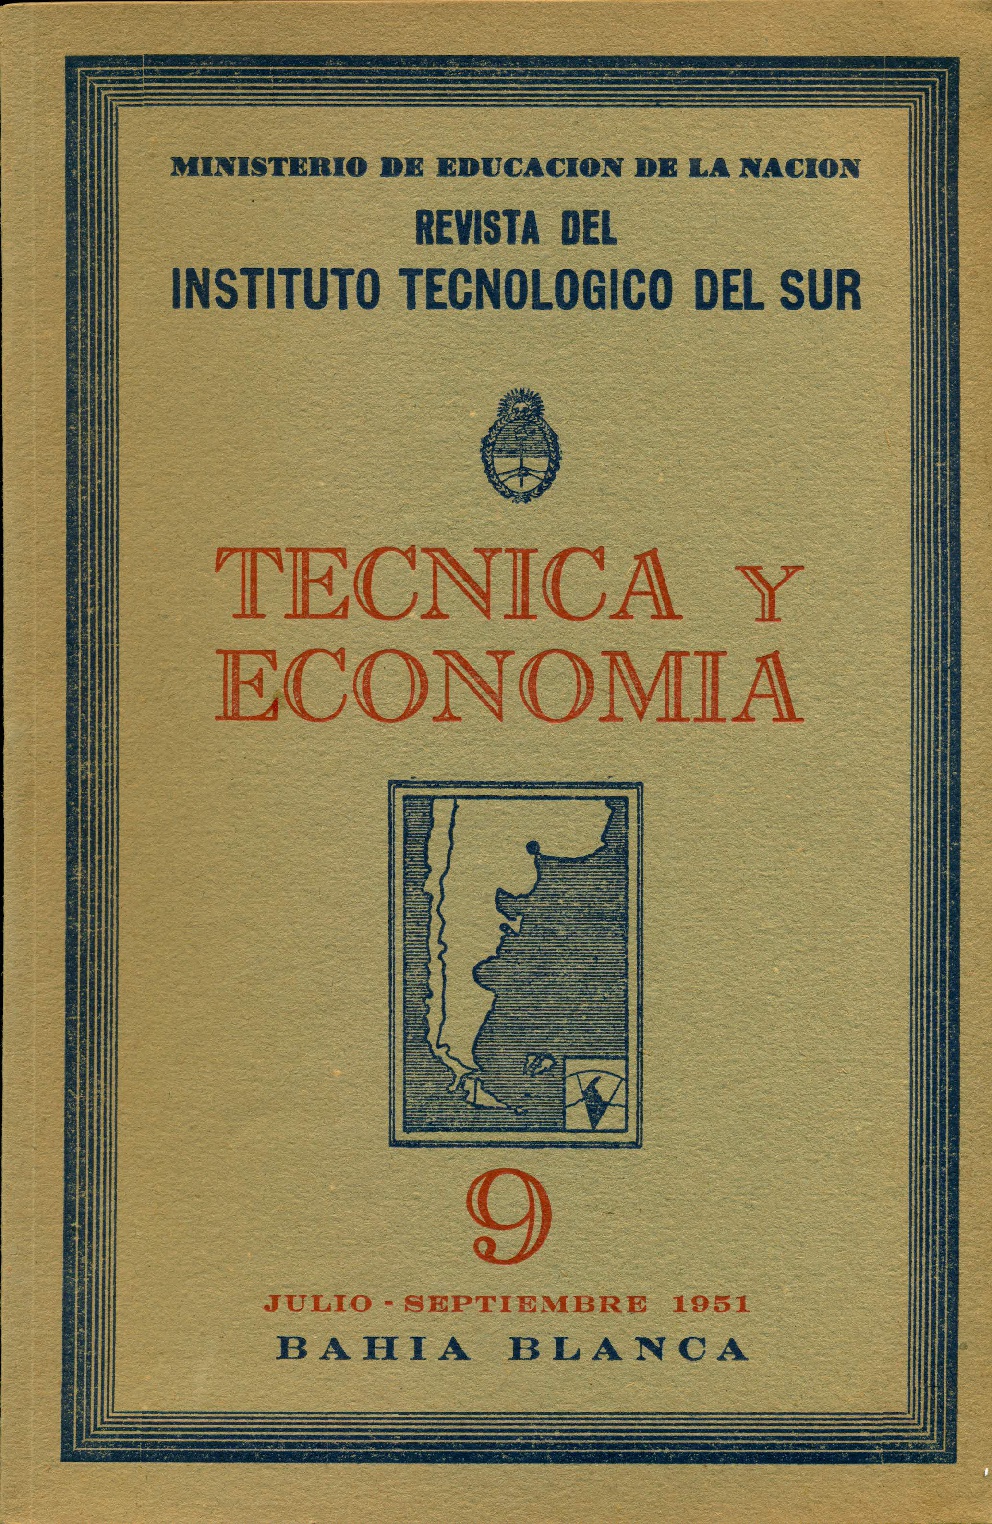 					Visualizar v. 3 n. 9 (1951): Técnica y Economía
				